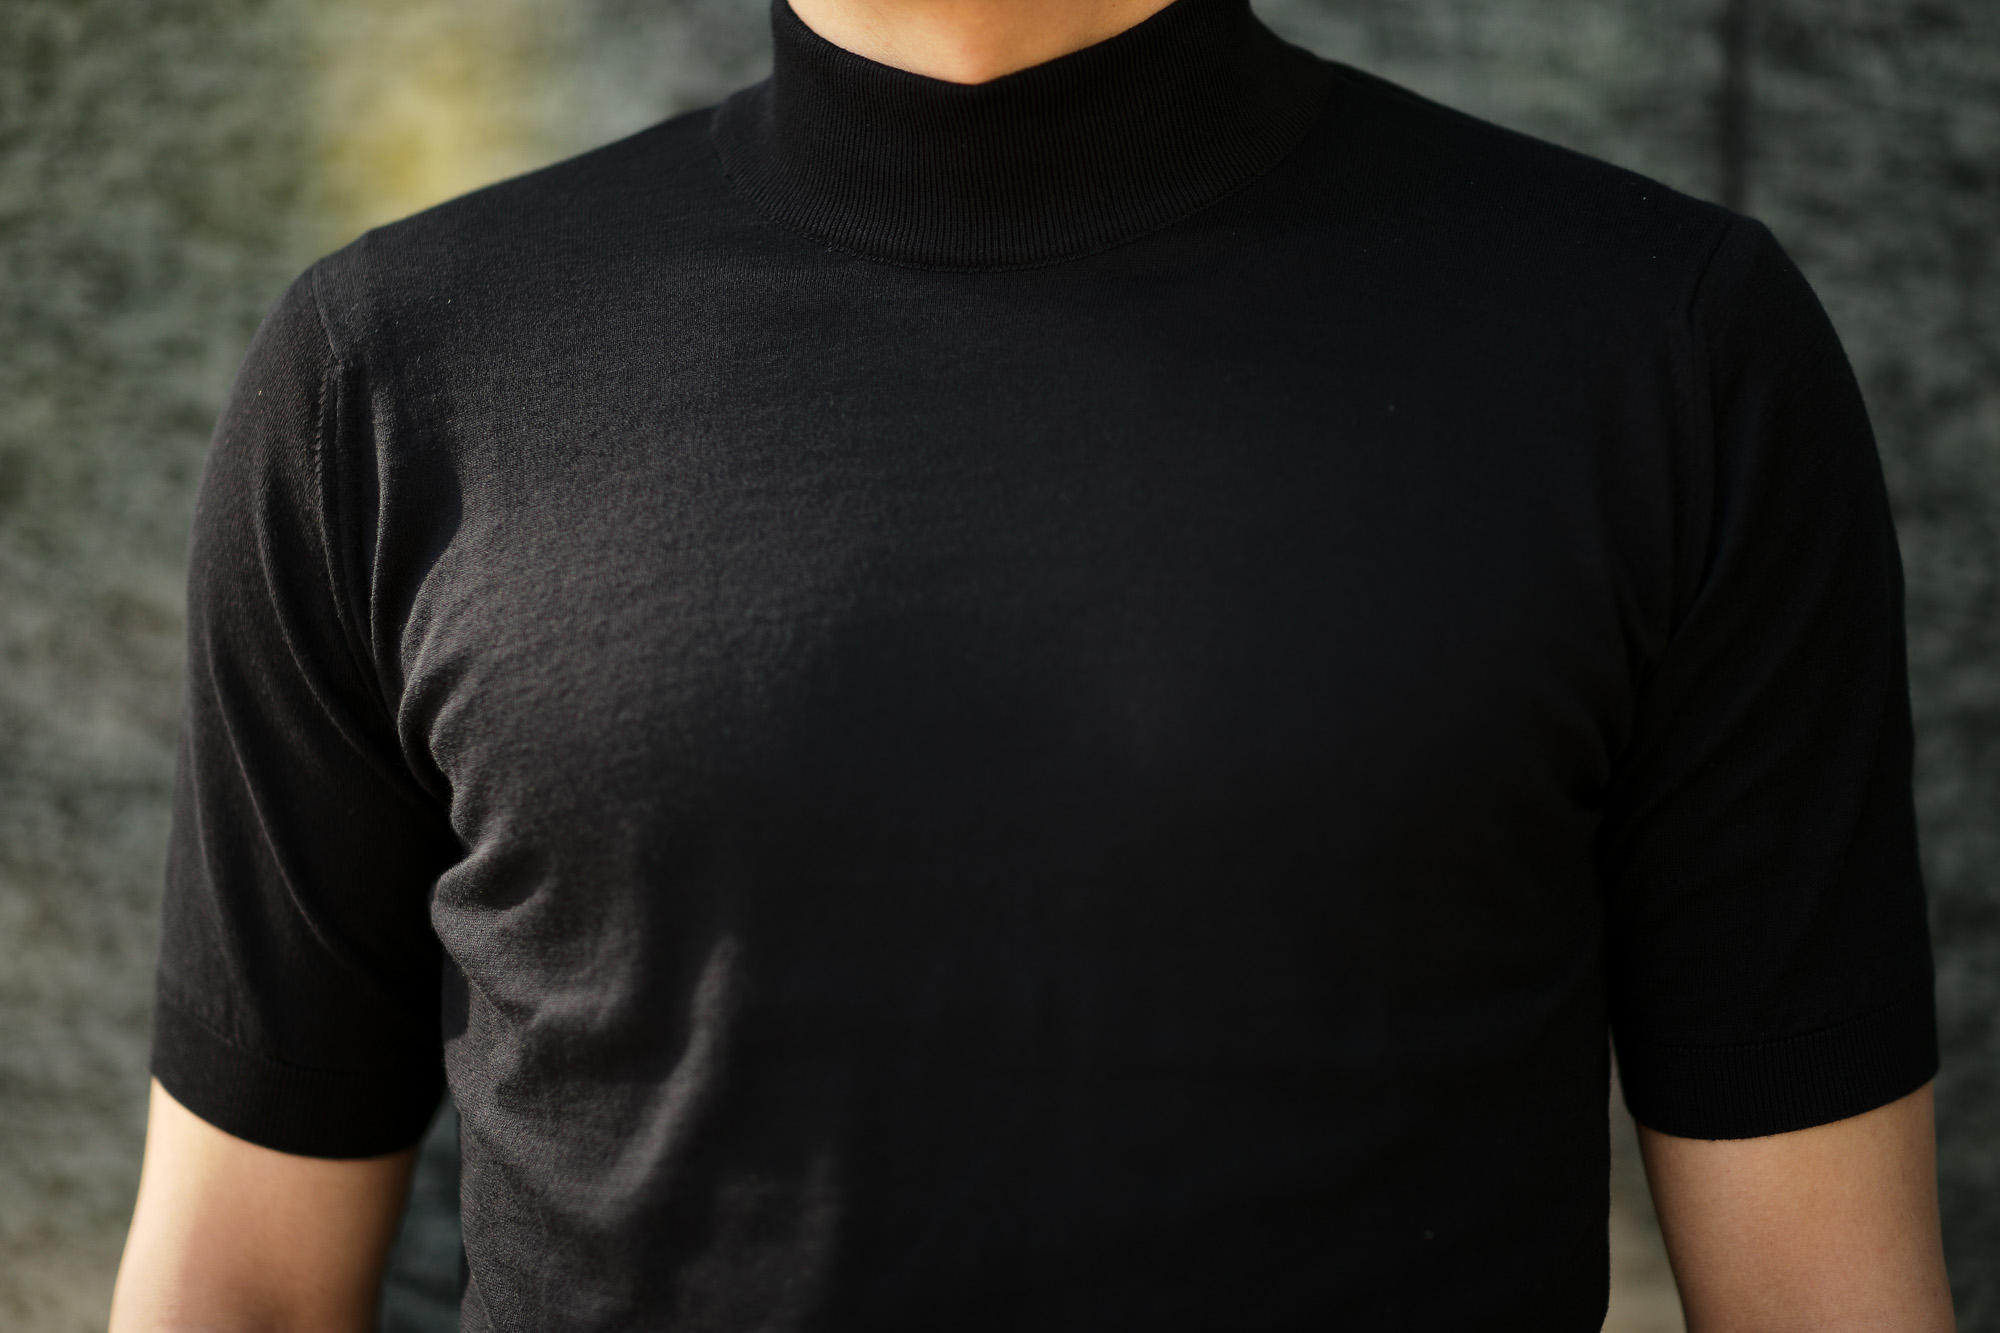 JOHN SMEDLEY (ジョンスメドレー) S3813 Mock neck T-shirt SEA ISLAND COTTON (シーアイランドコットン) コットンニット モックネック Tシャツ BLACK (ブラック) Made in England (イギリス製) 2019 春夏新作 johnsmedley 愛知 名古屋 altoediritto アルトエデリット